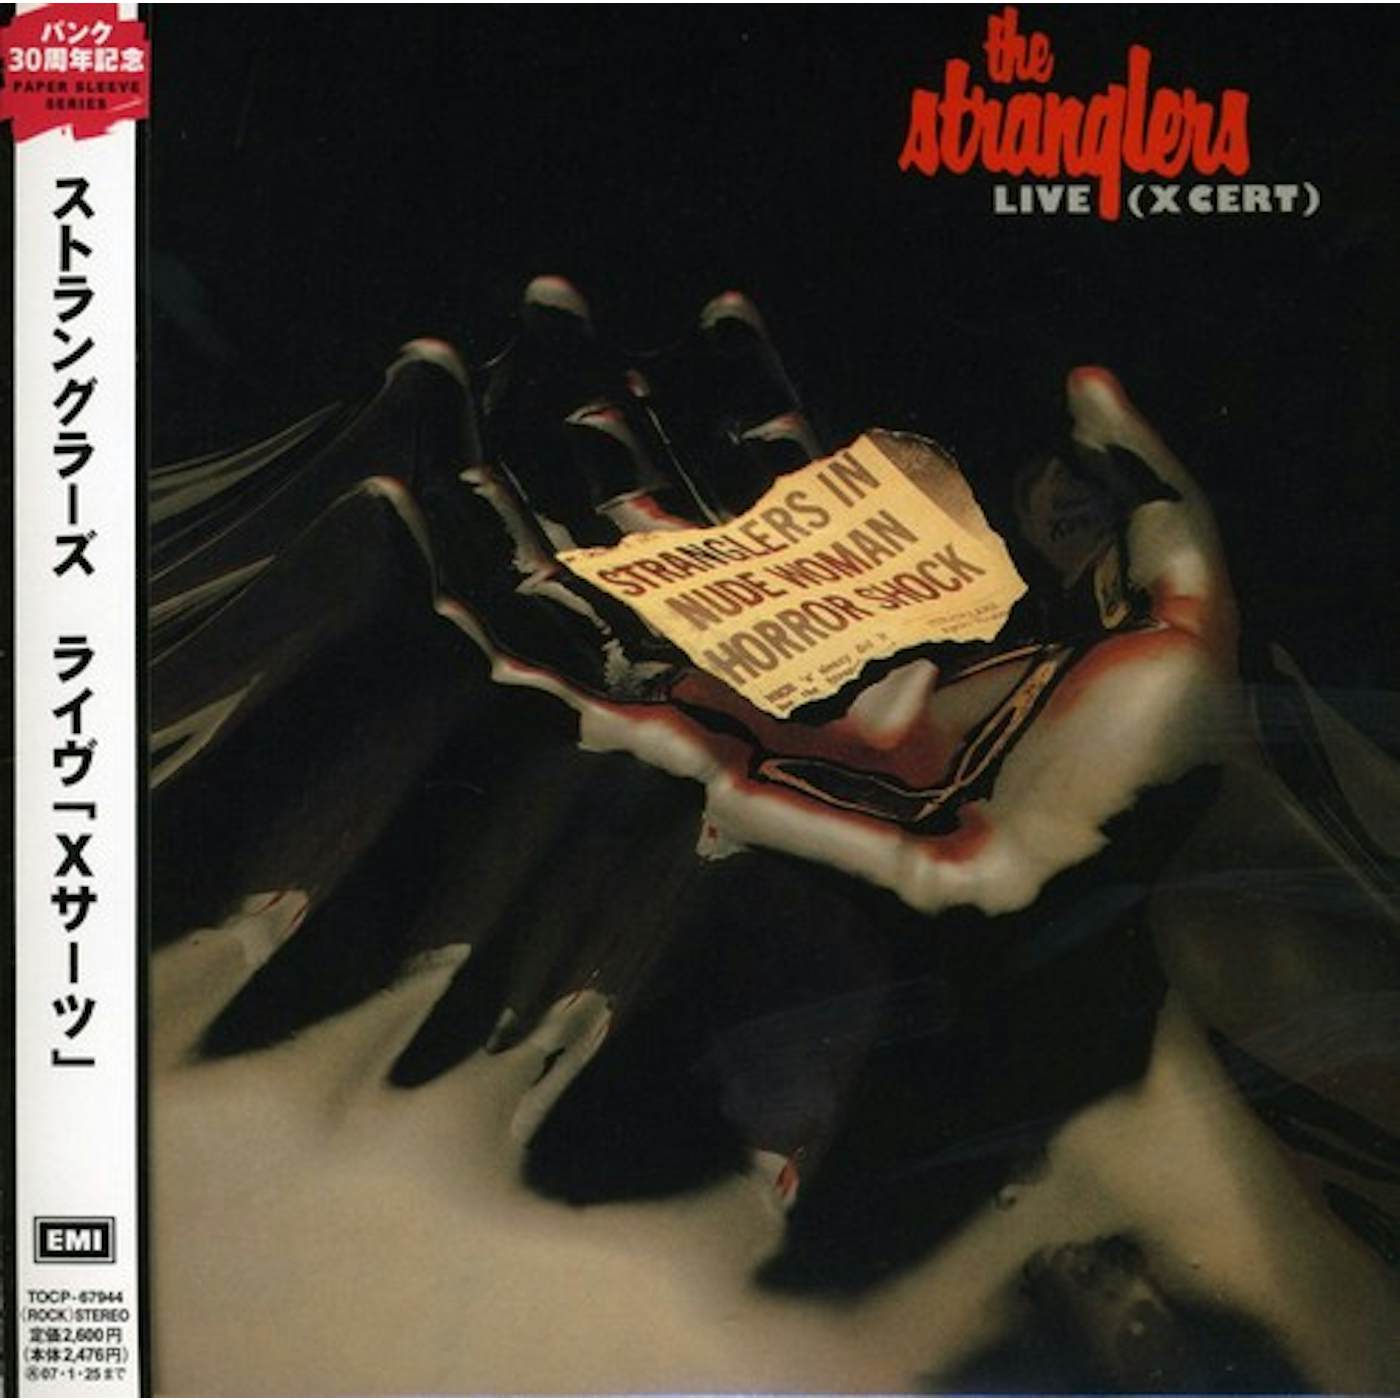 The Stranglers LIVE (X-CERTS) CD